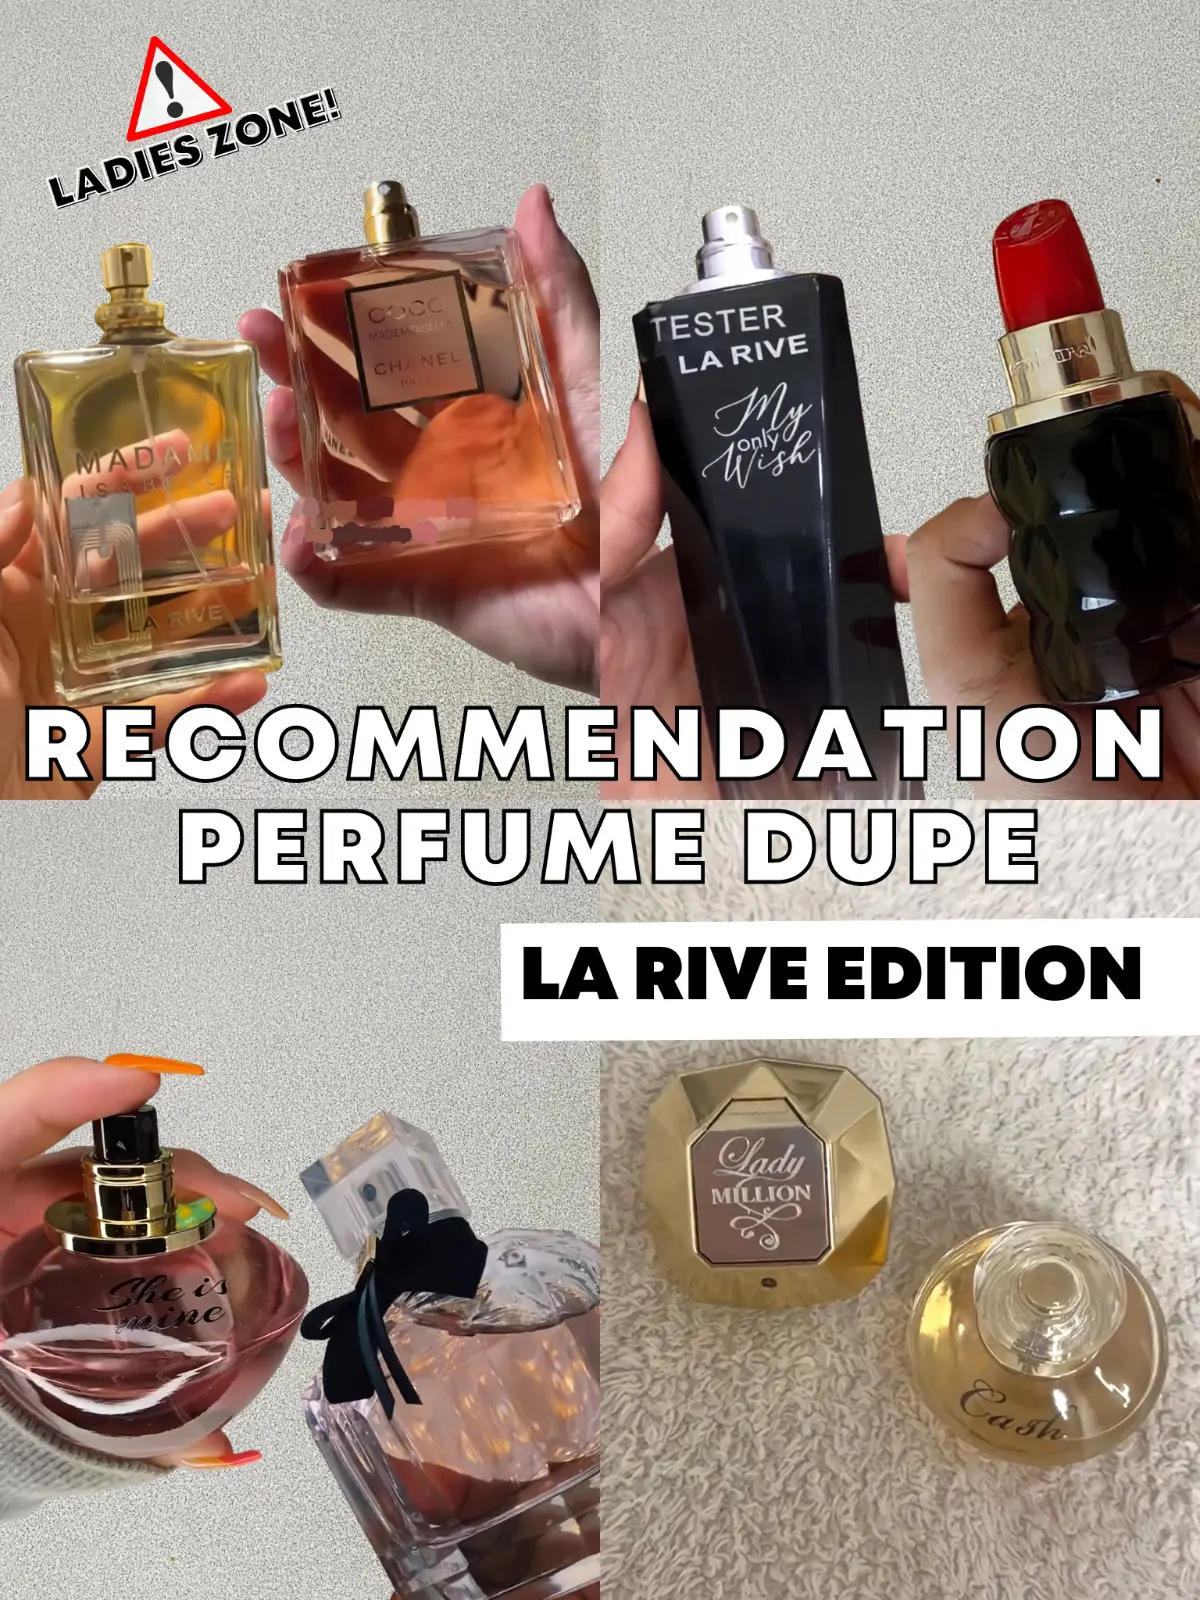 Recommendation perfume dupe, La rive edition! 👭🏻